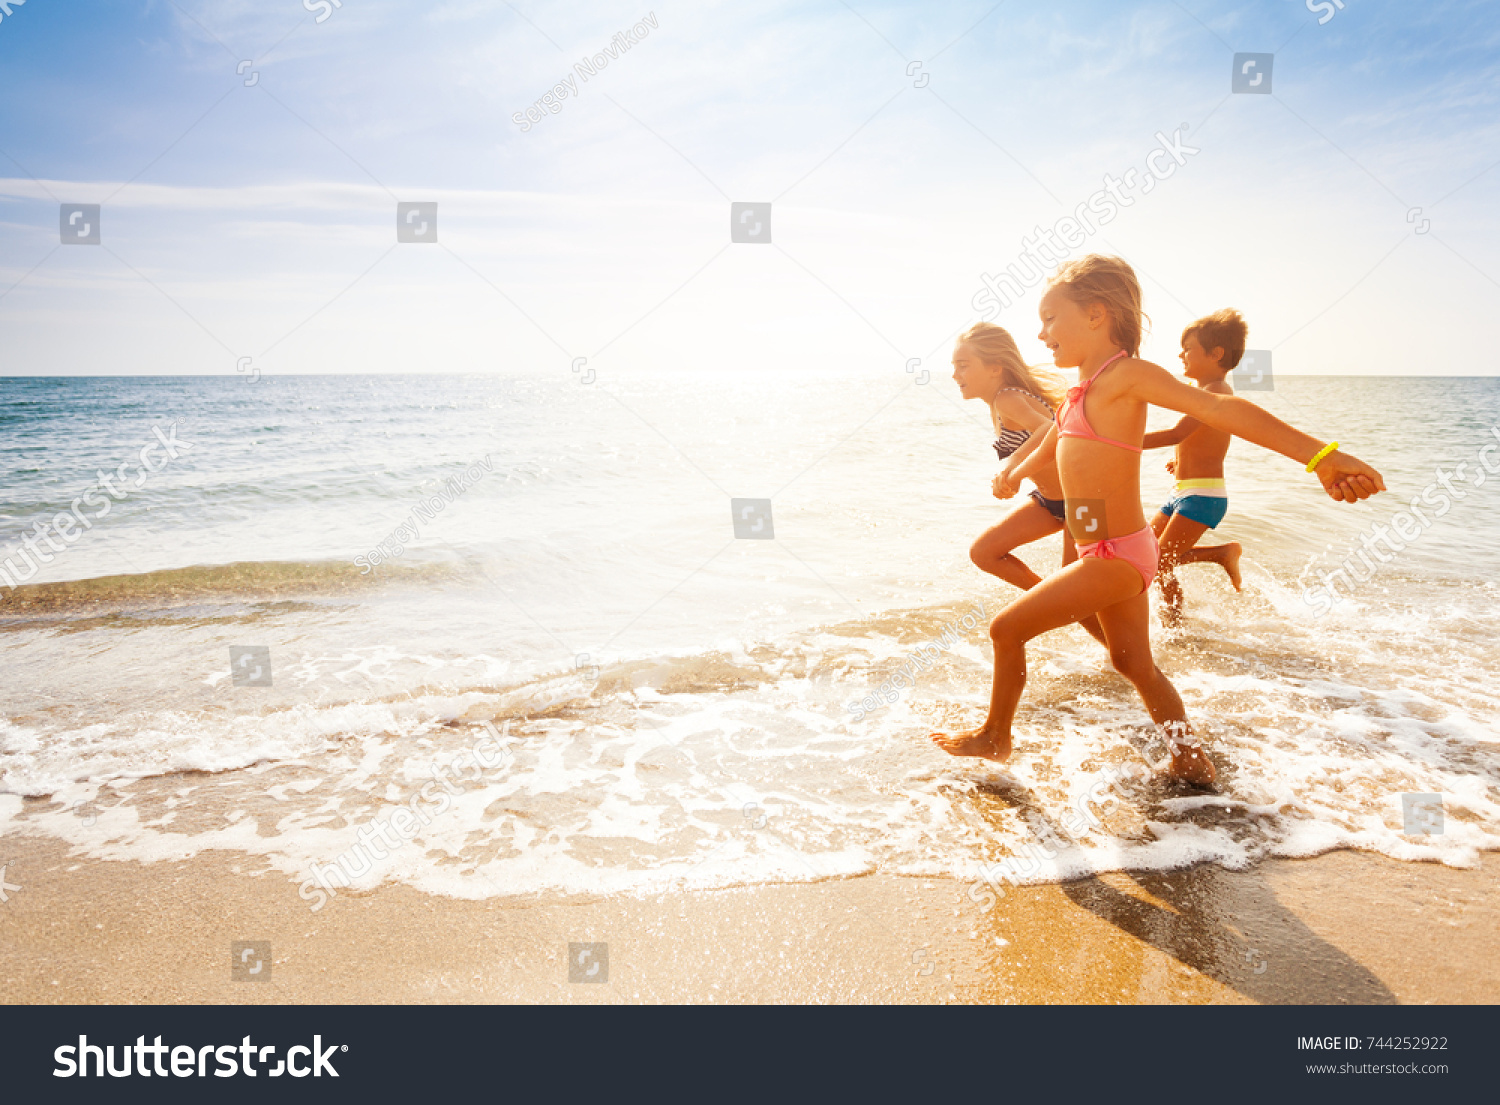 Cute kids having fun on sandy beach in summer #744252922